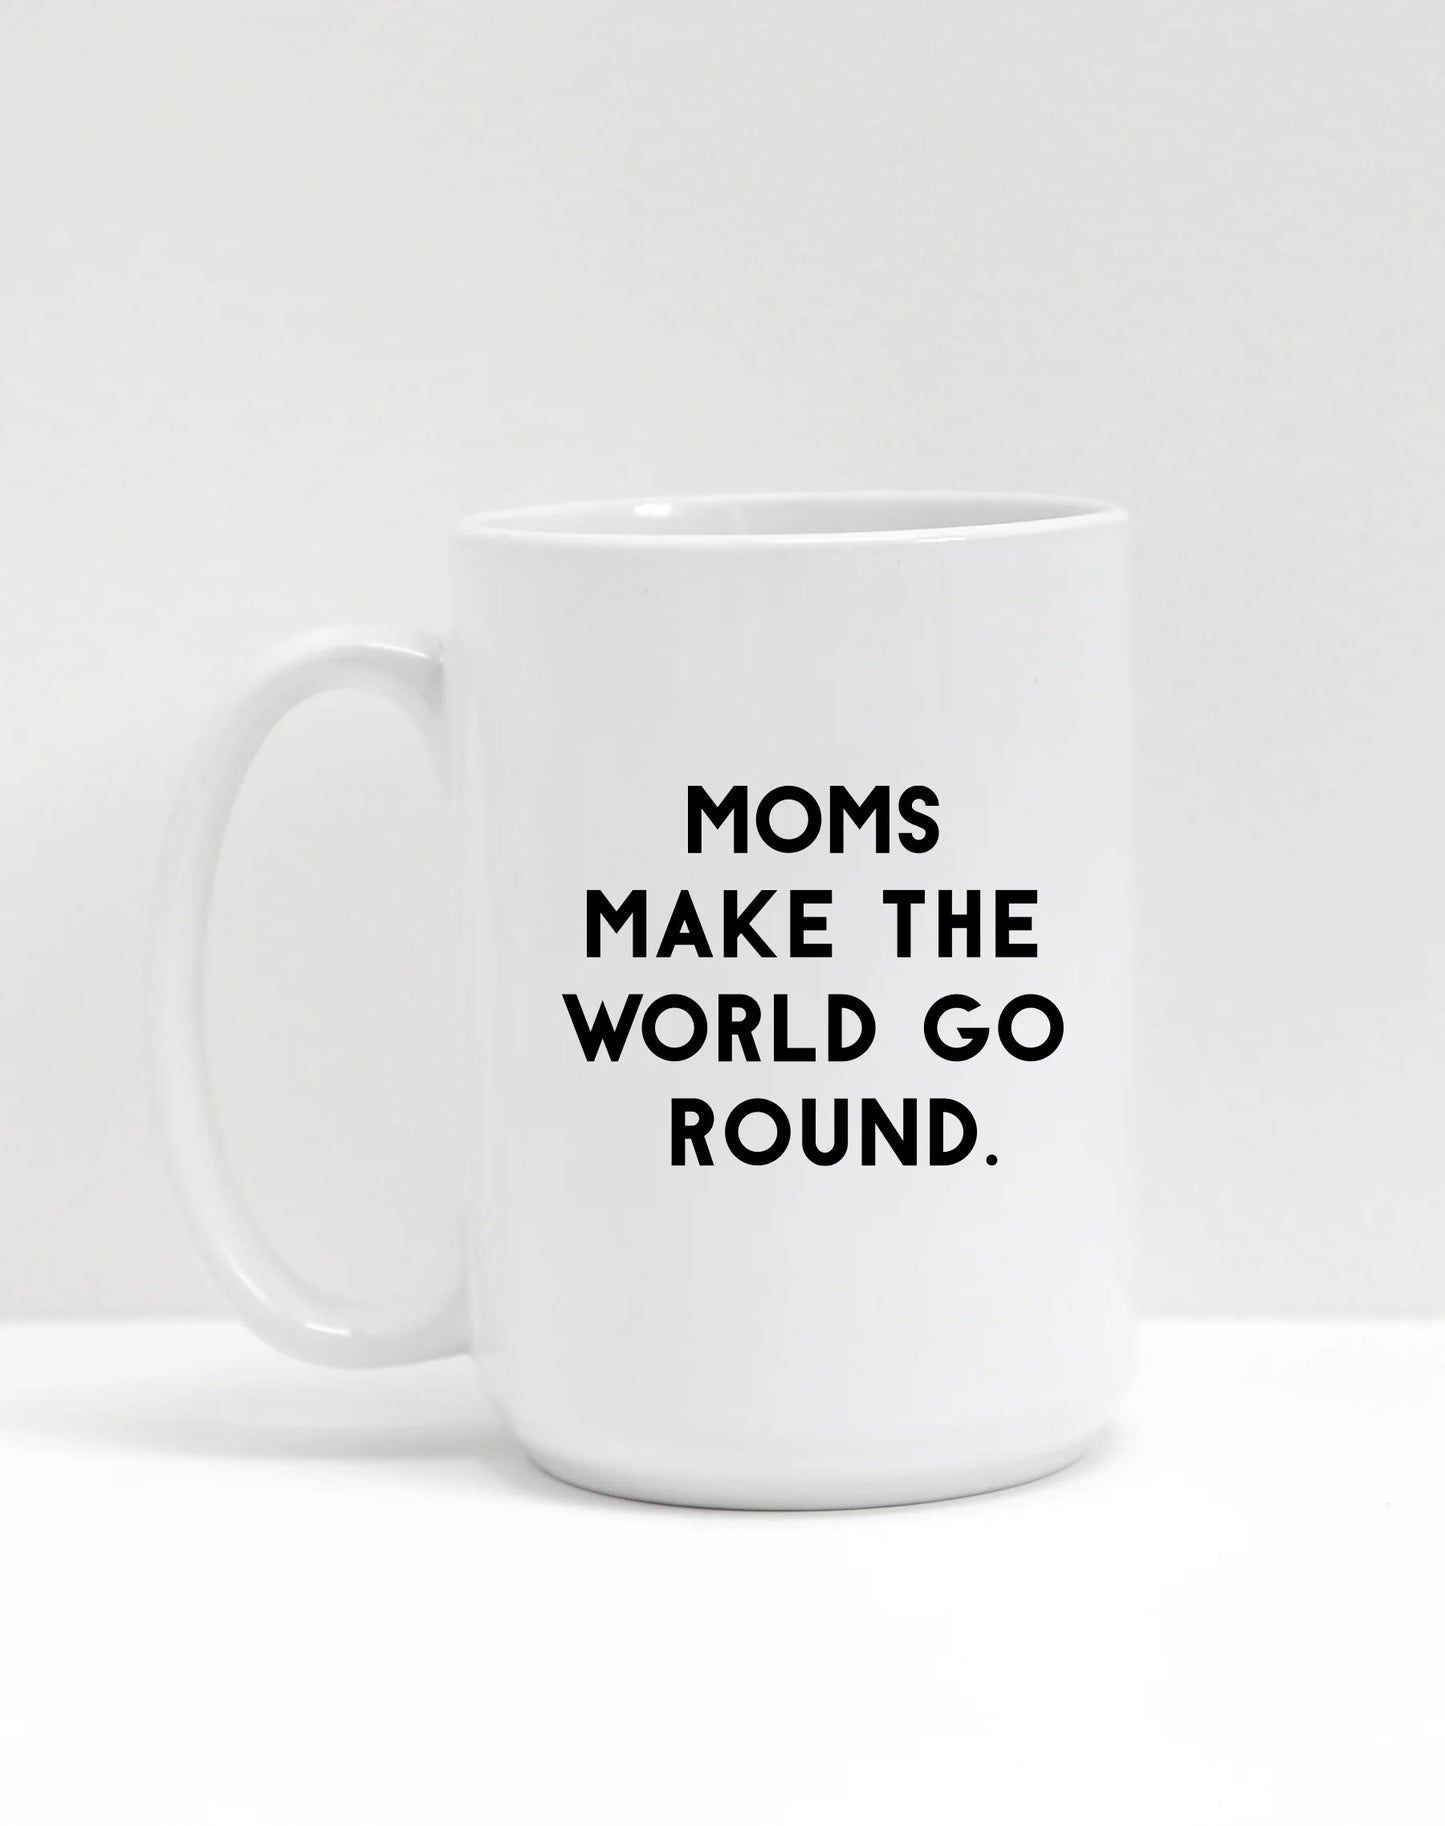 The "MOMS MAKE THE WORLD GO ROUND" Mug Brunette the Label